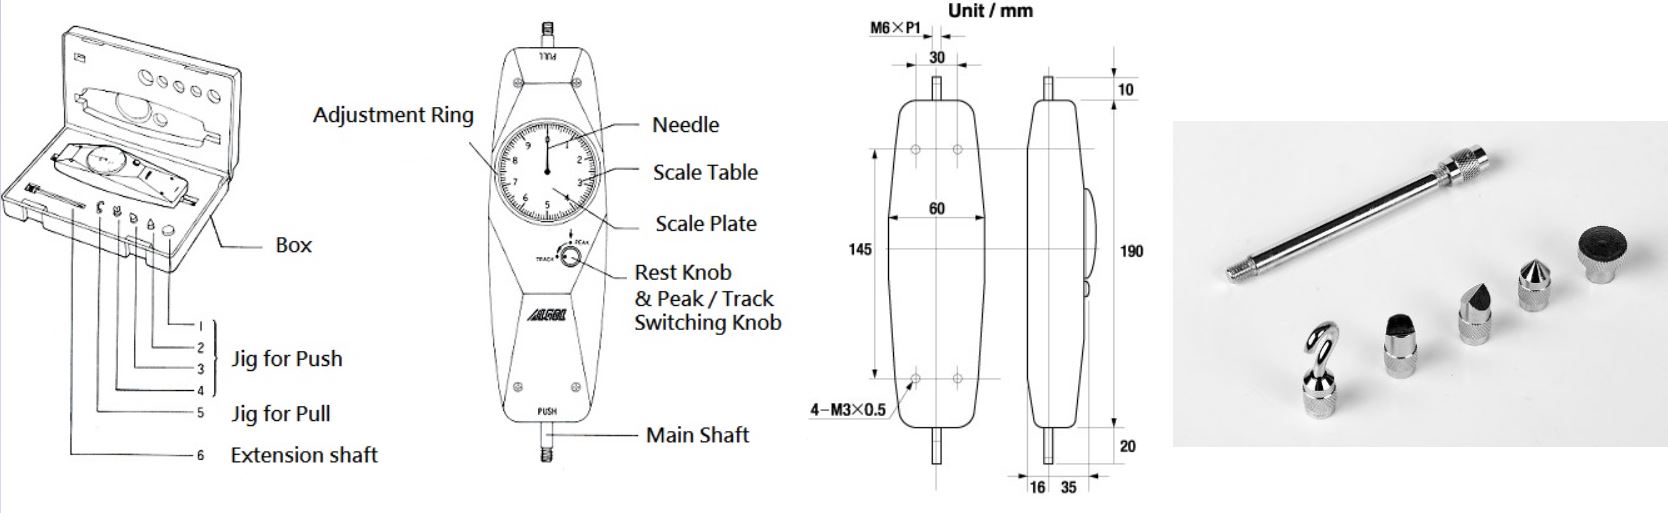 Cấu trúc máy đo lực NK- Algol